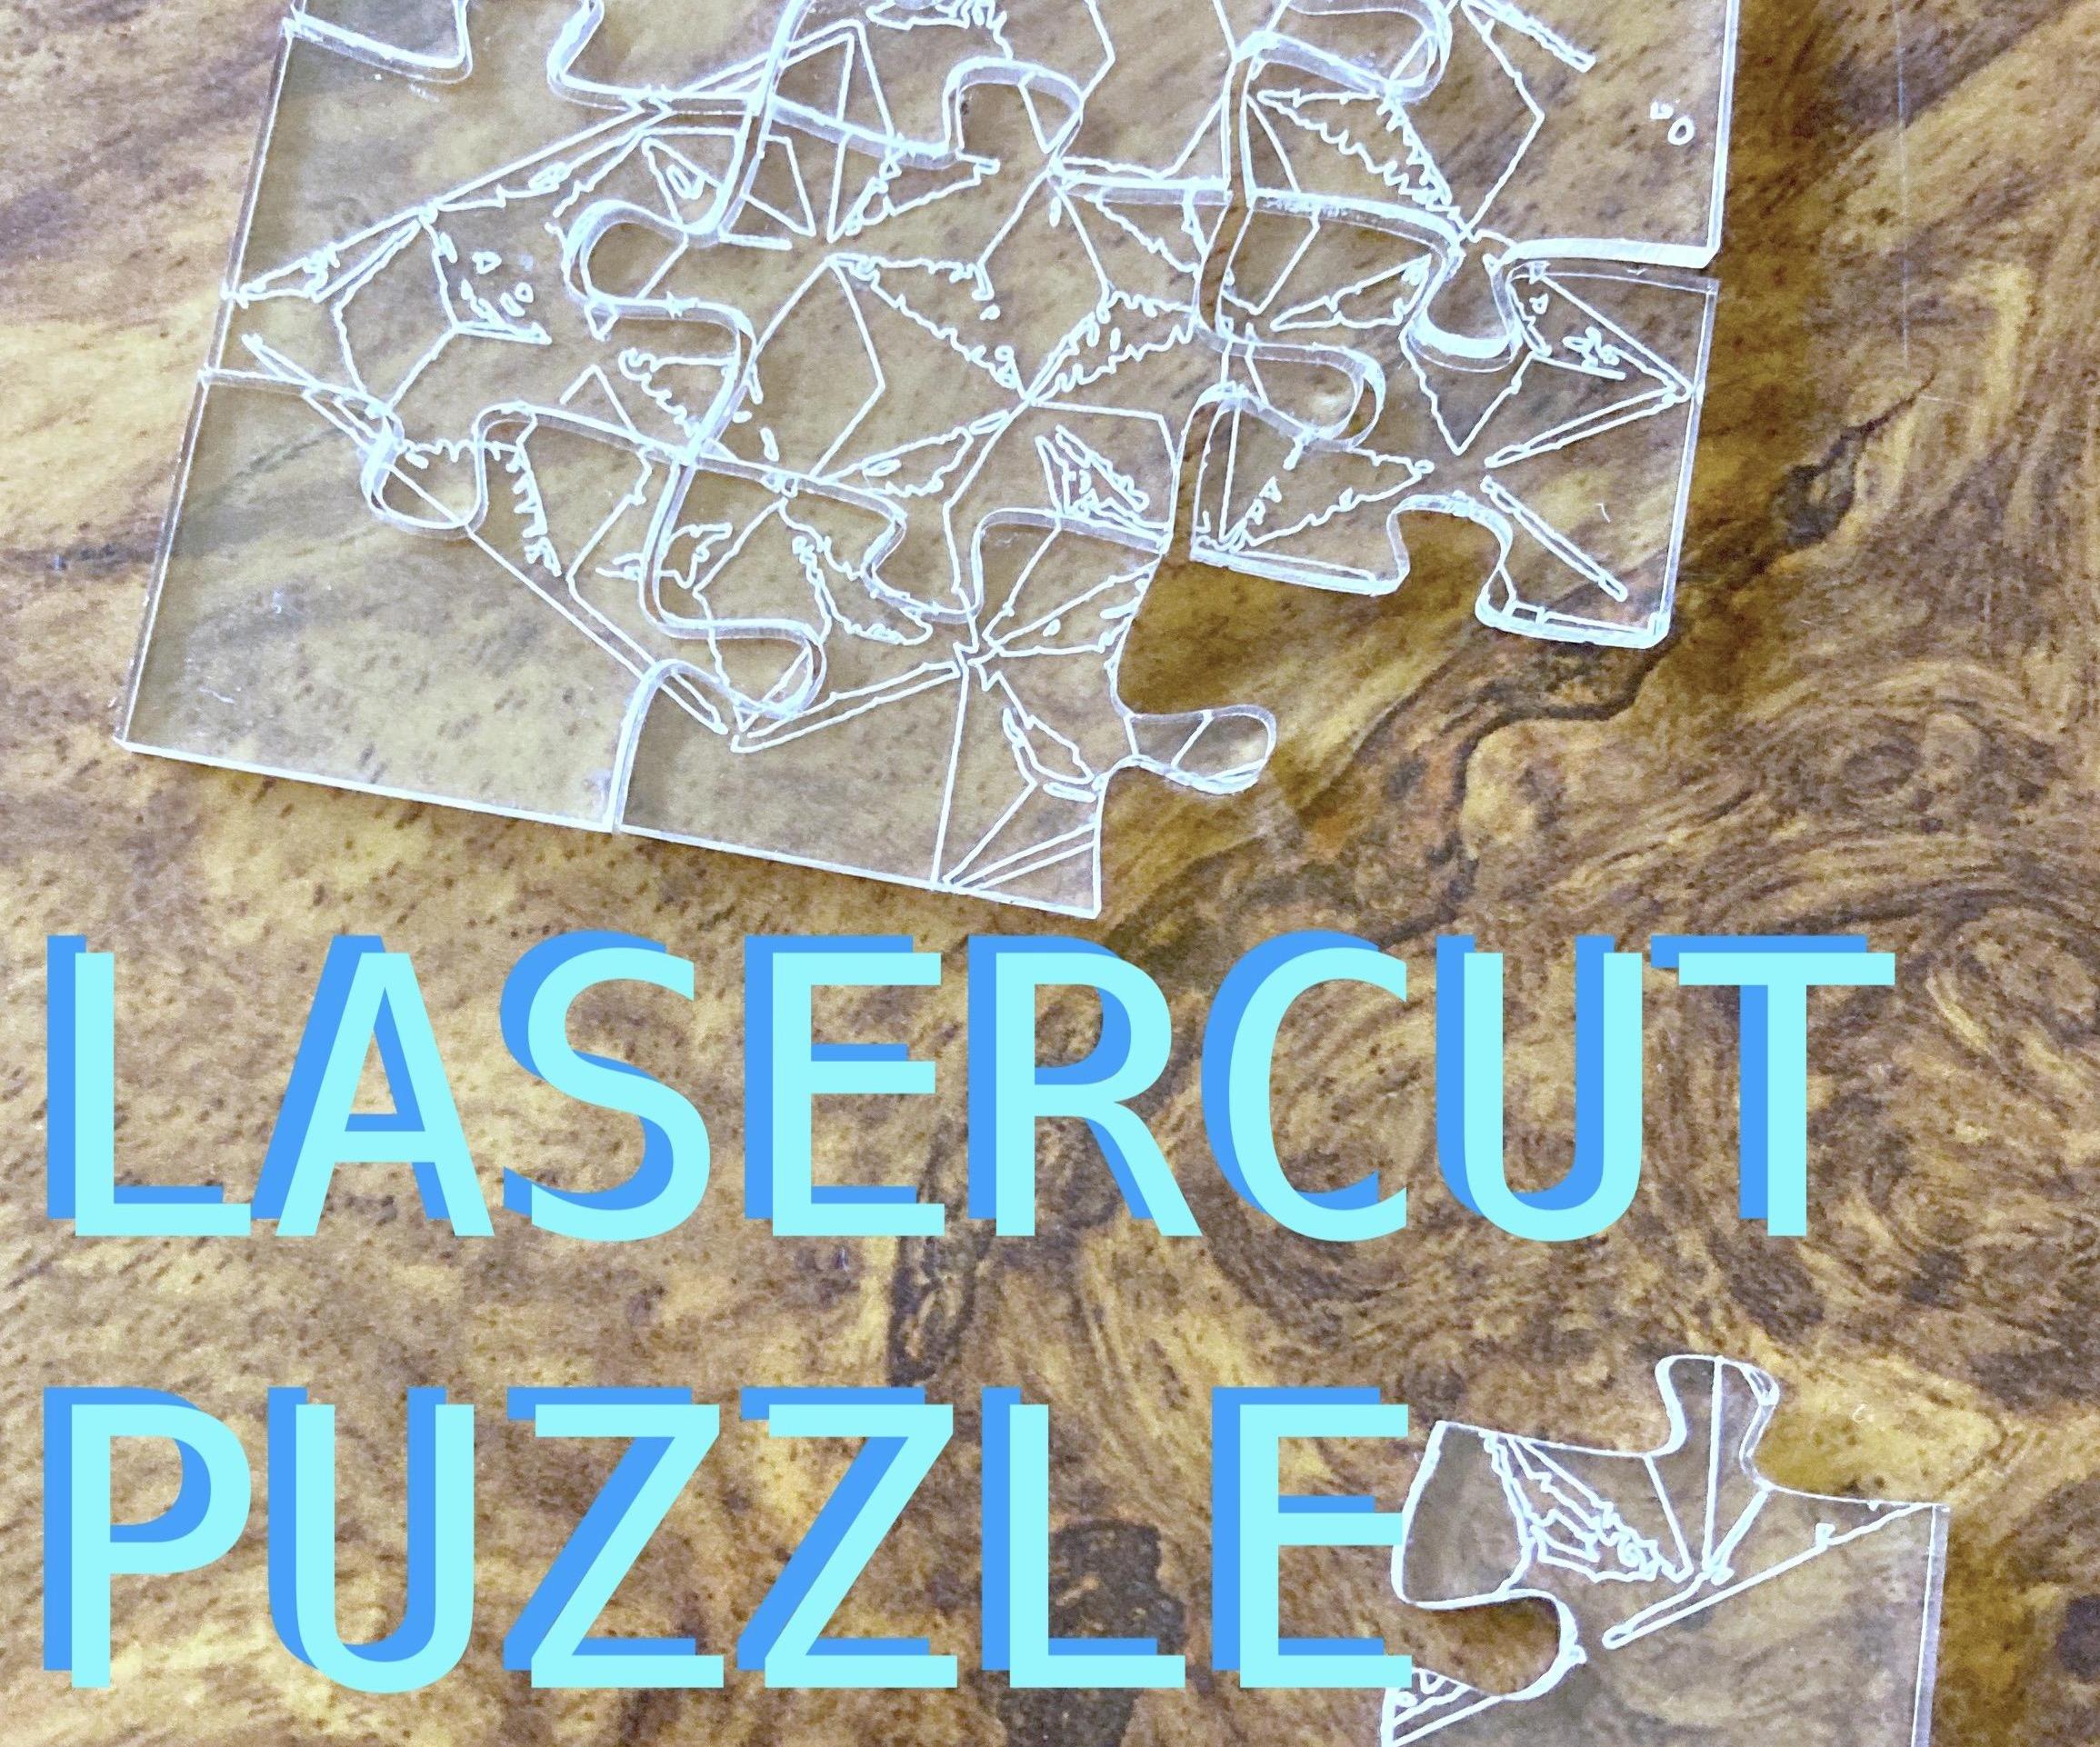 Lasercut Puzzle Project